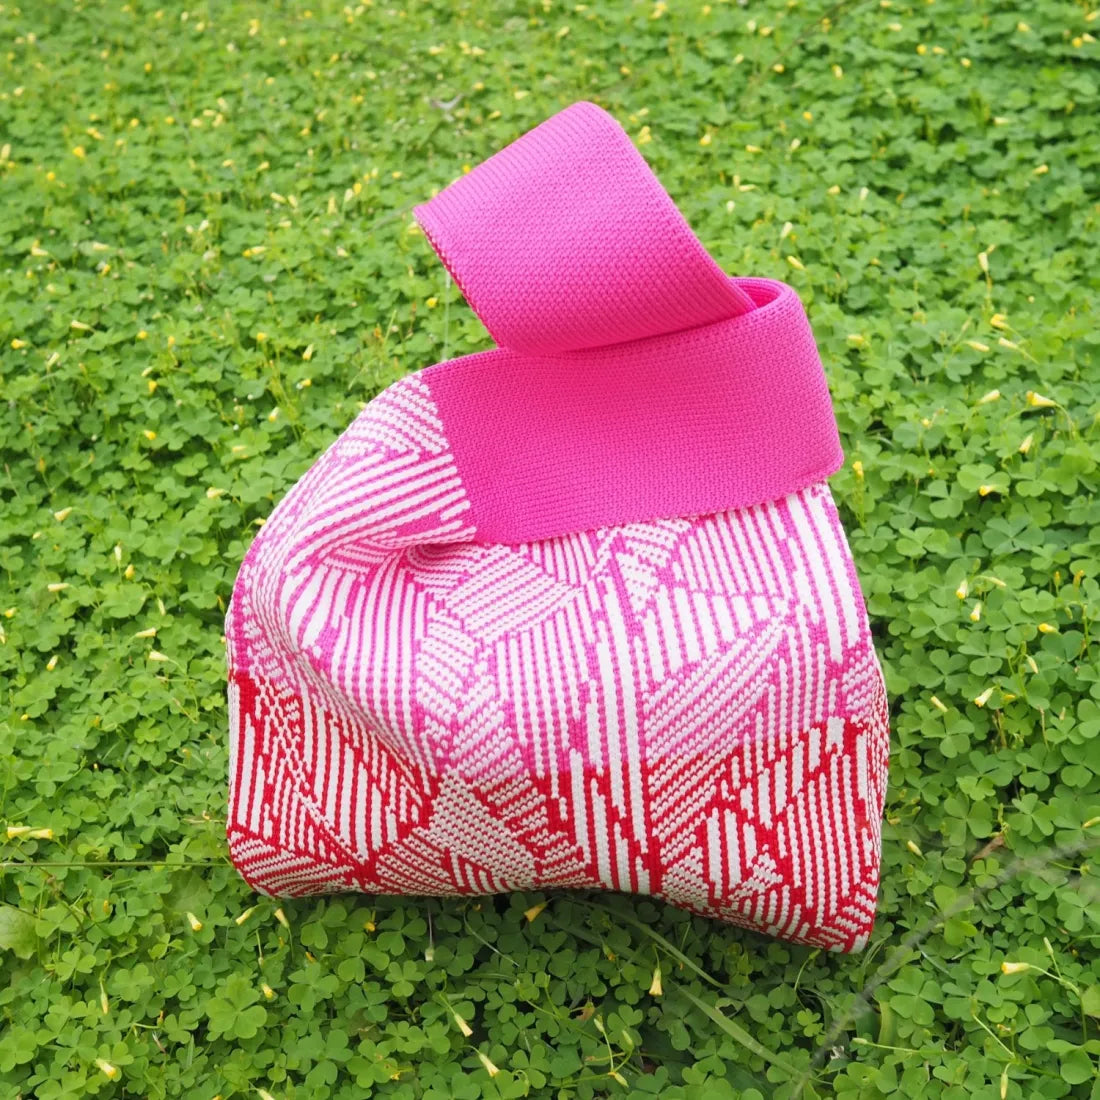 Horizon Pink Knot Bag - Made In Hawaii